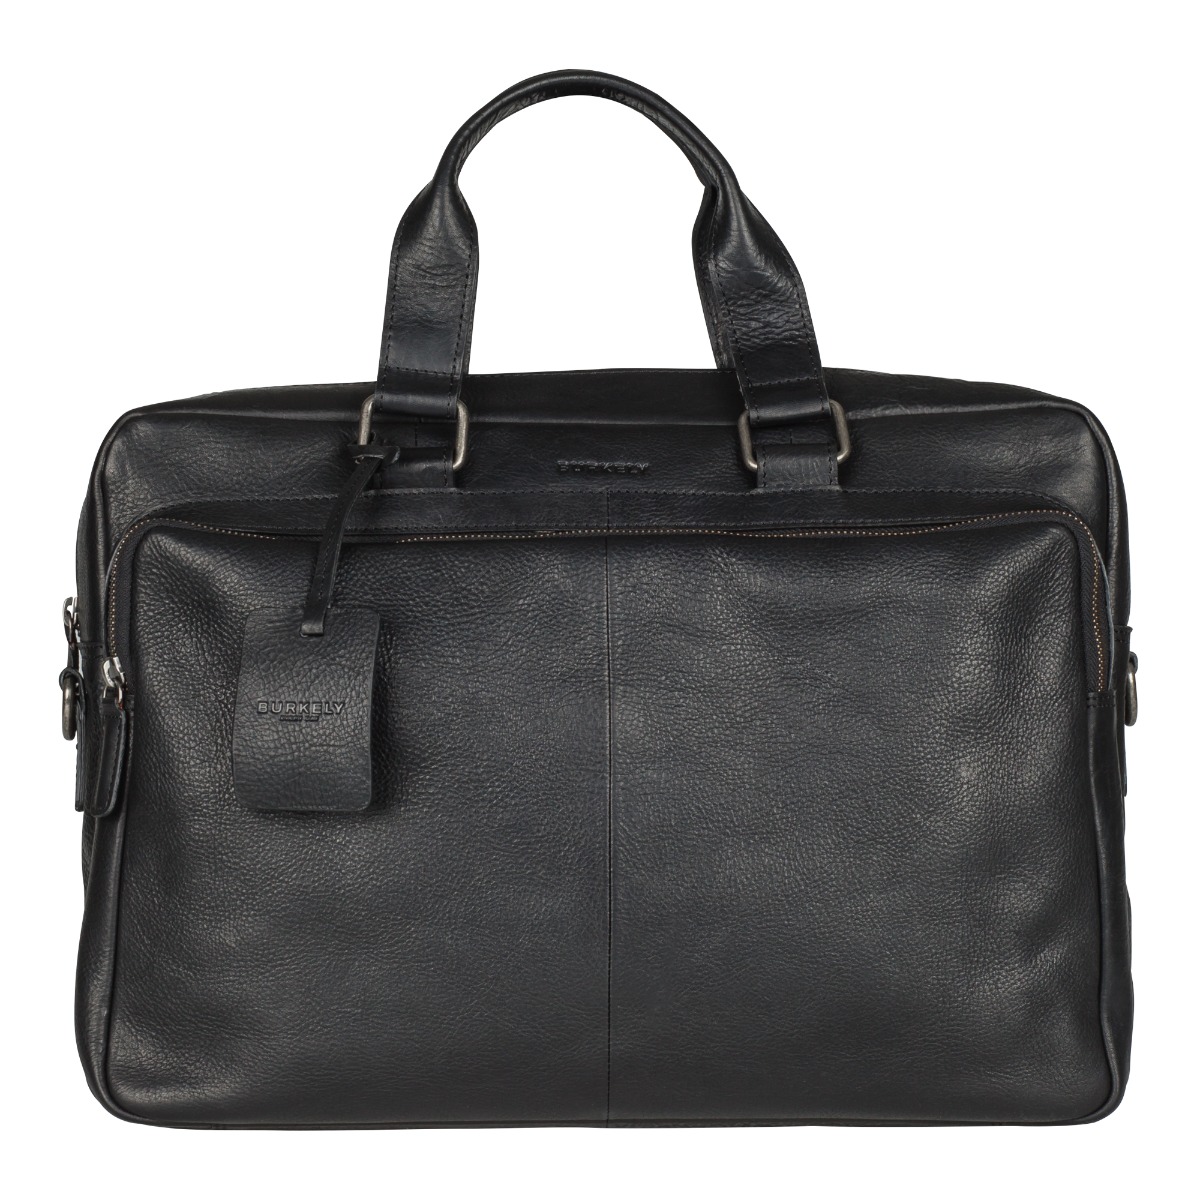 Burkely Antique Avery Workbag 15.6 laptop bag Black